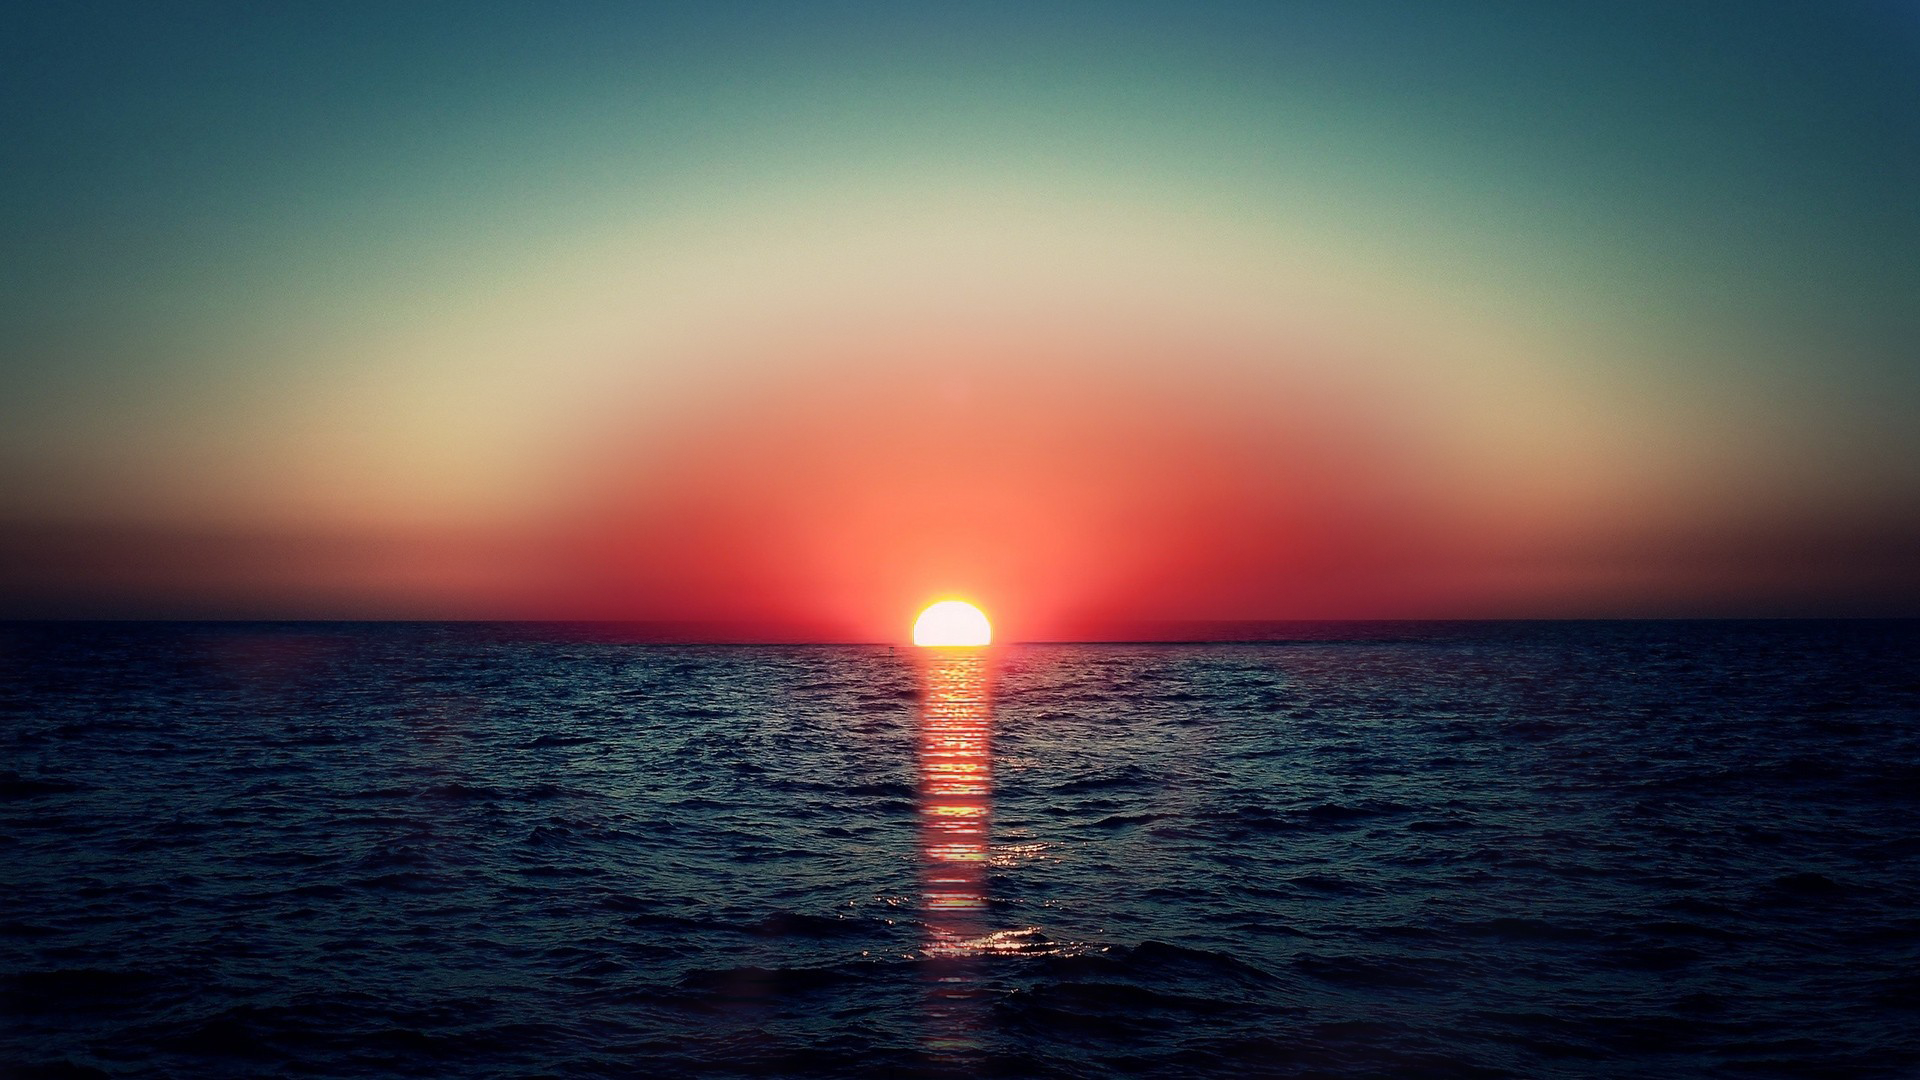 Sunset red sun in the sea Desktop wallpaper 1920x1080